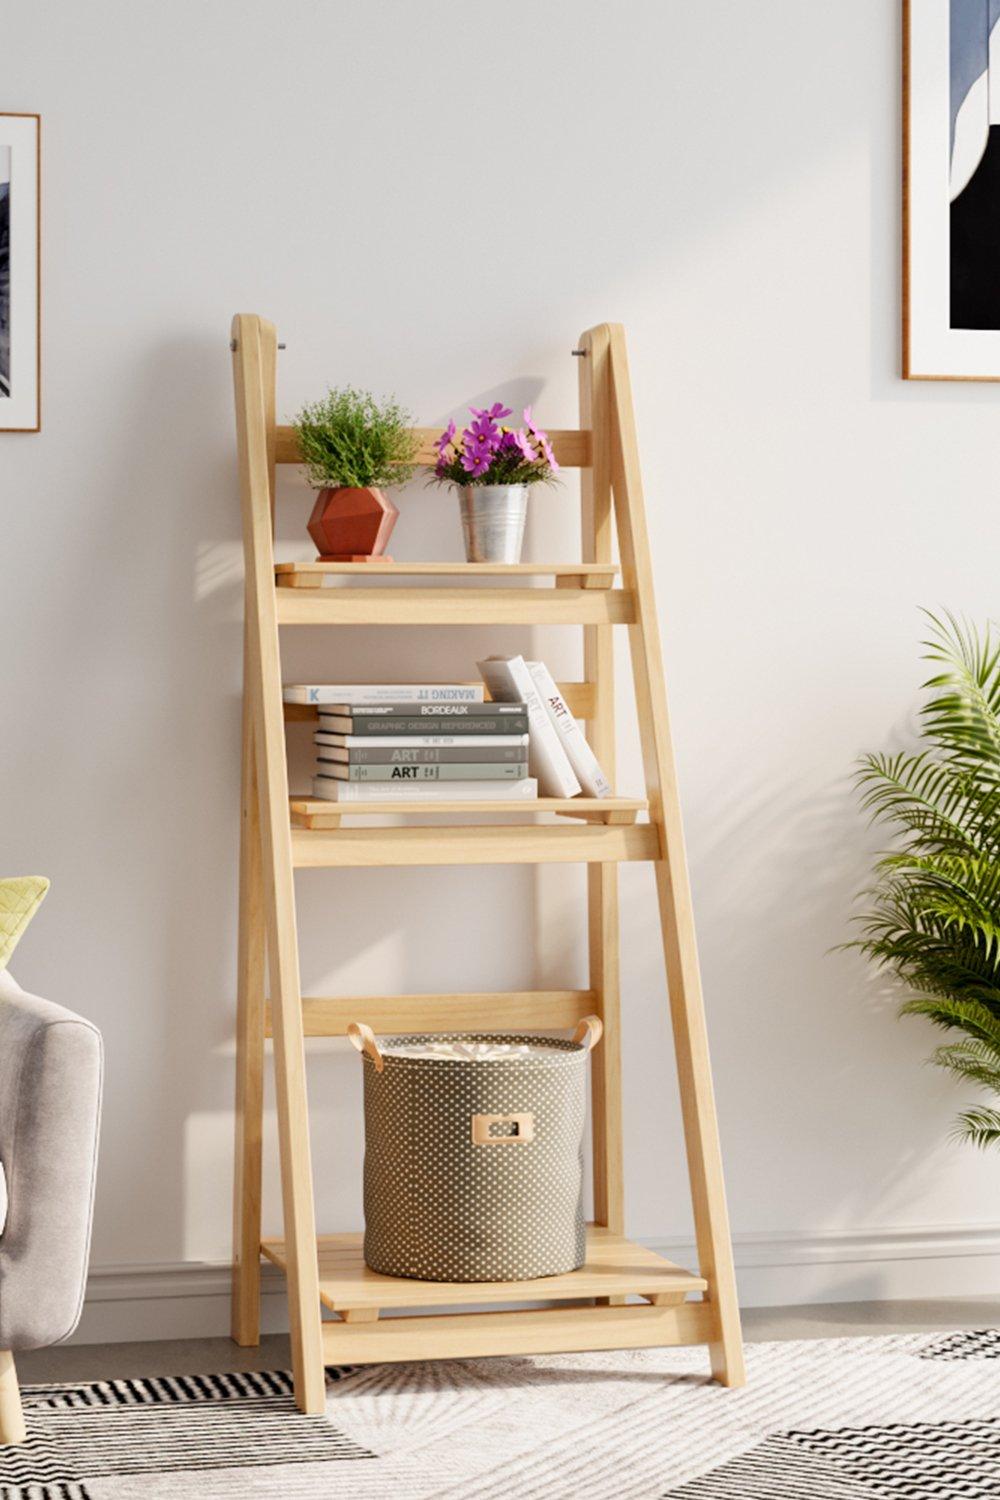 3 Layer Wooden Foldable Ladder Shelf for Plants